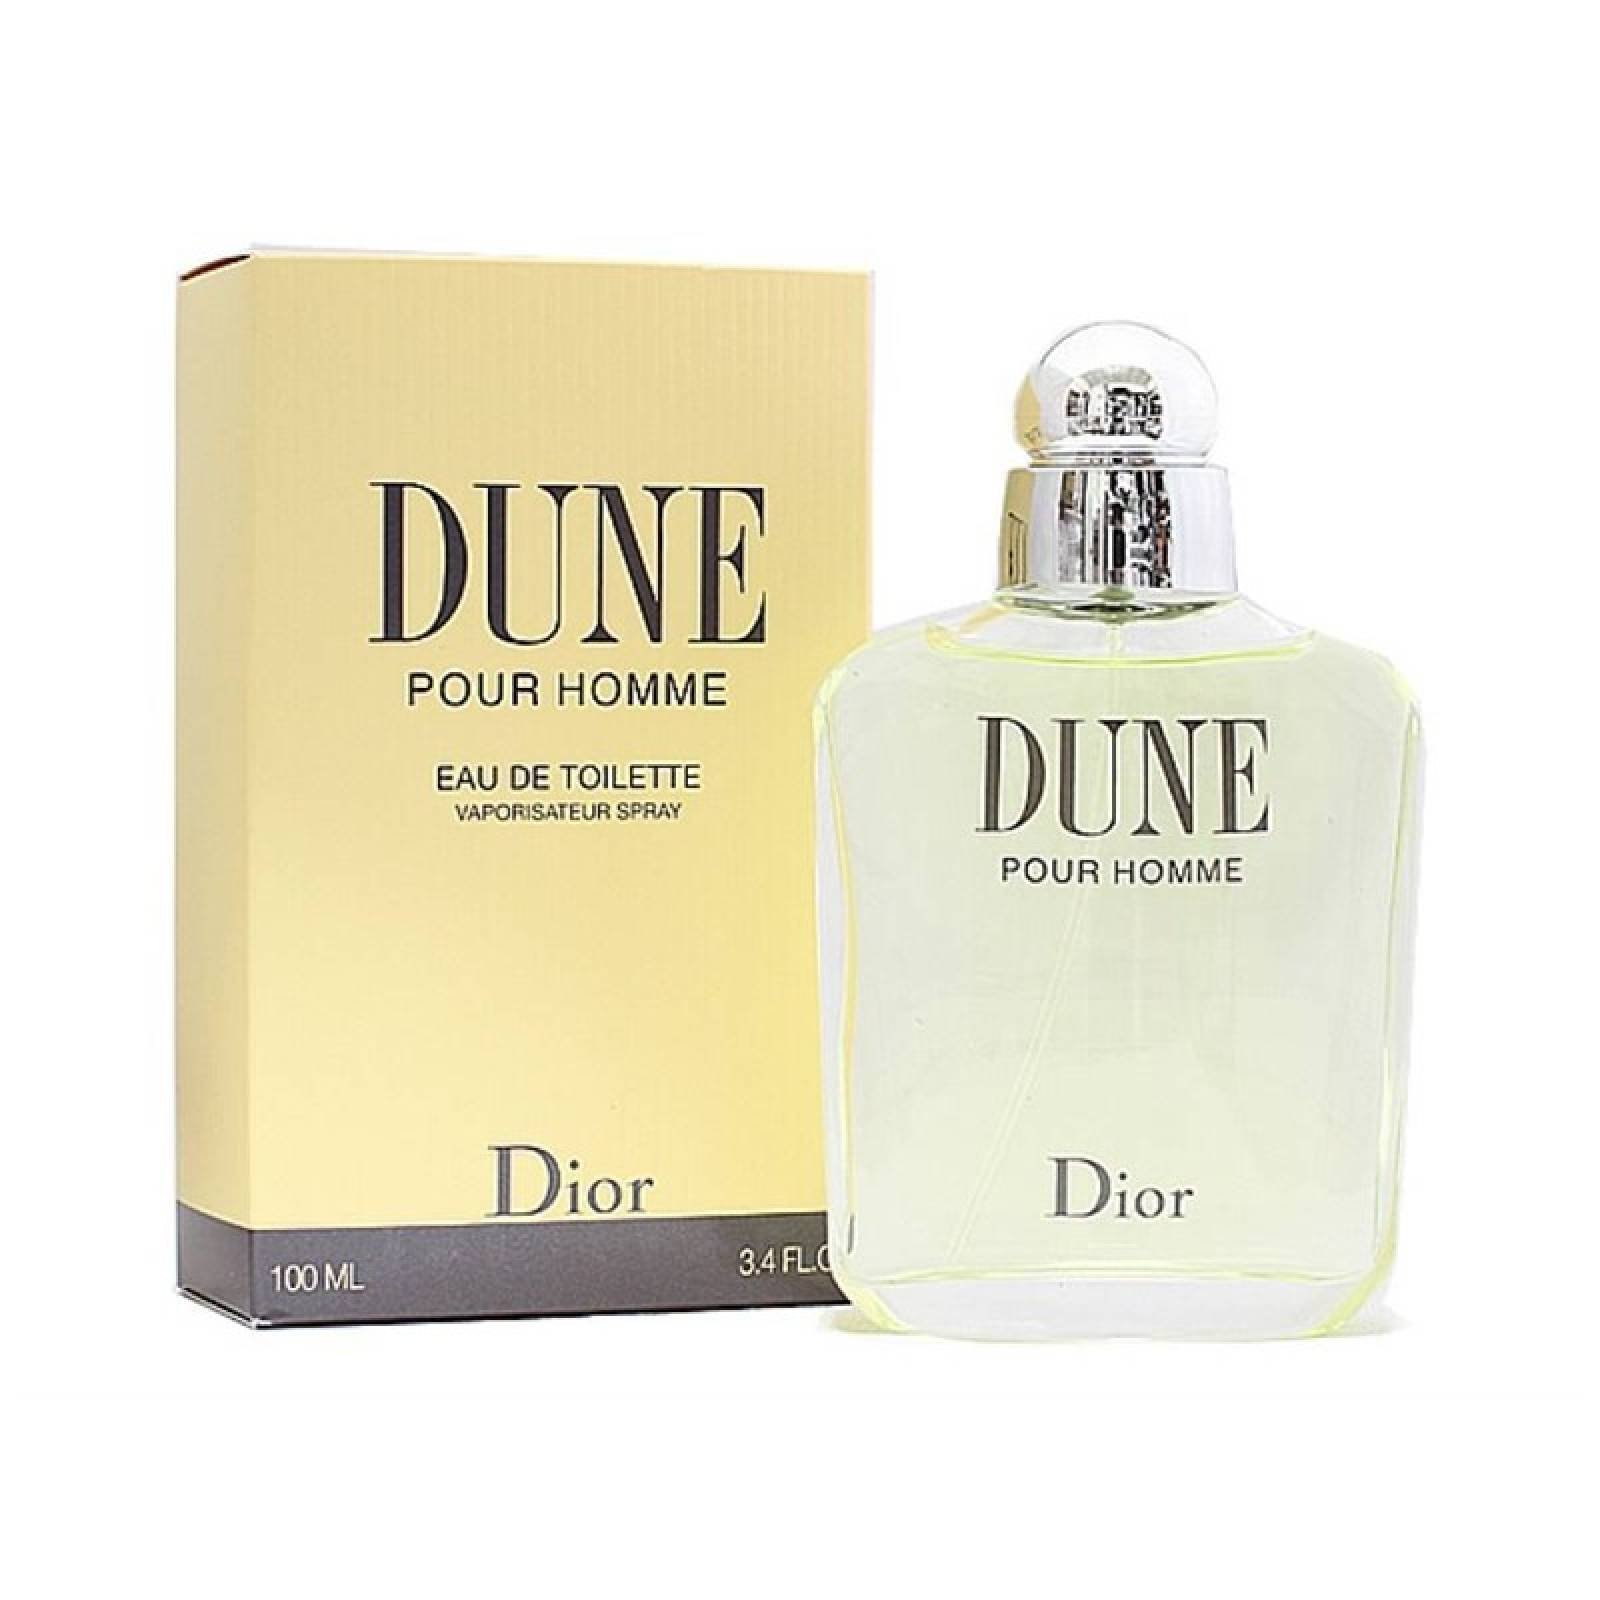 Dune 100 ml Eau de Toilette Spray de Christian Dior Fragancia para Cab